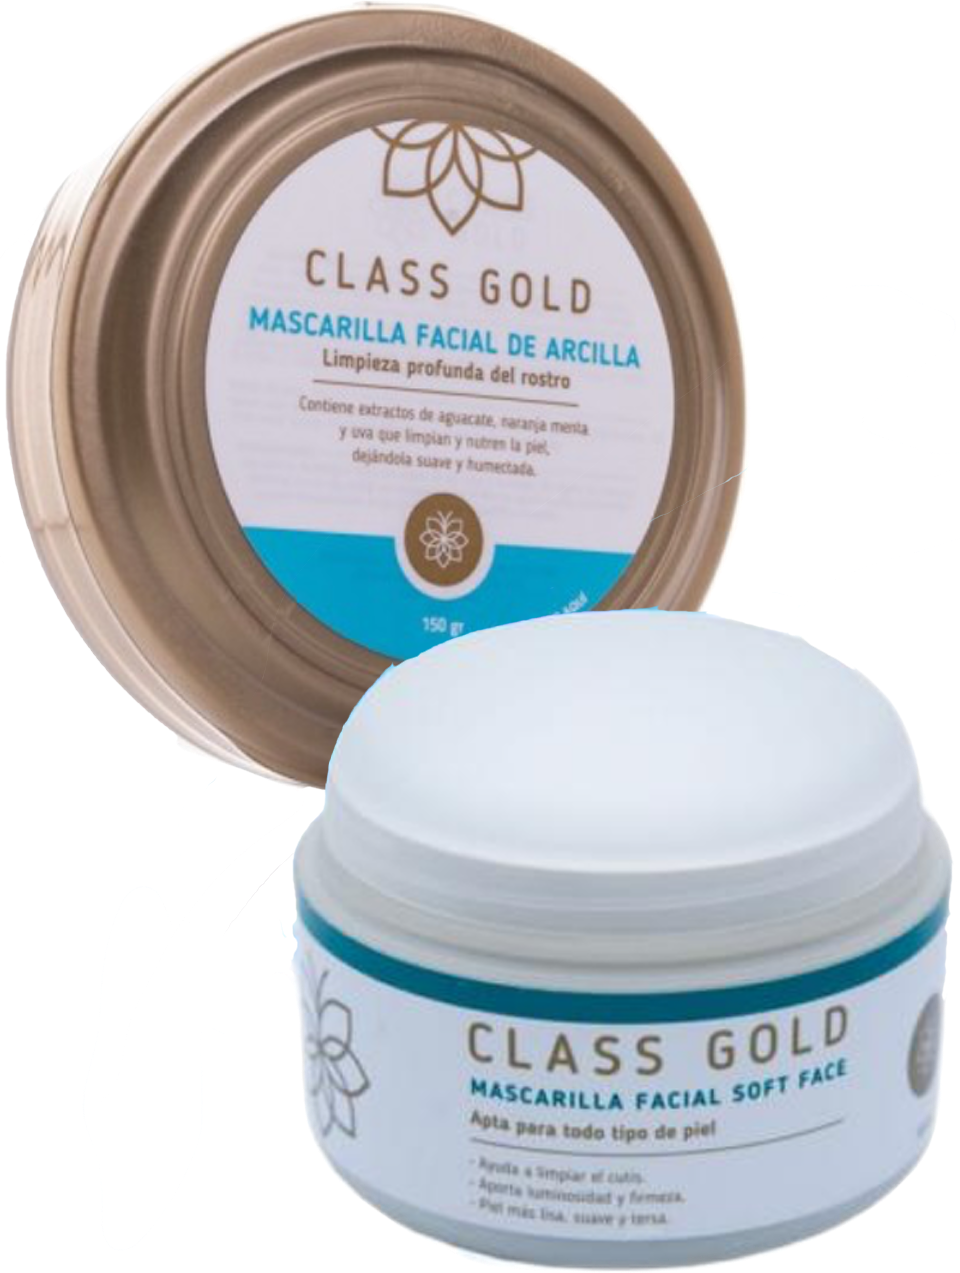 Kit Mascarilla Facial de Arcilla + Mascarilla Soft Face | Class Gold Mascarilla Class Gold Magic Hair Oficial